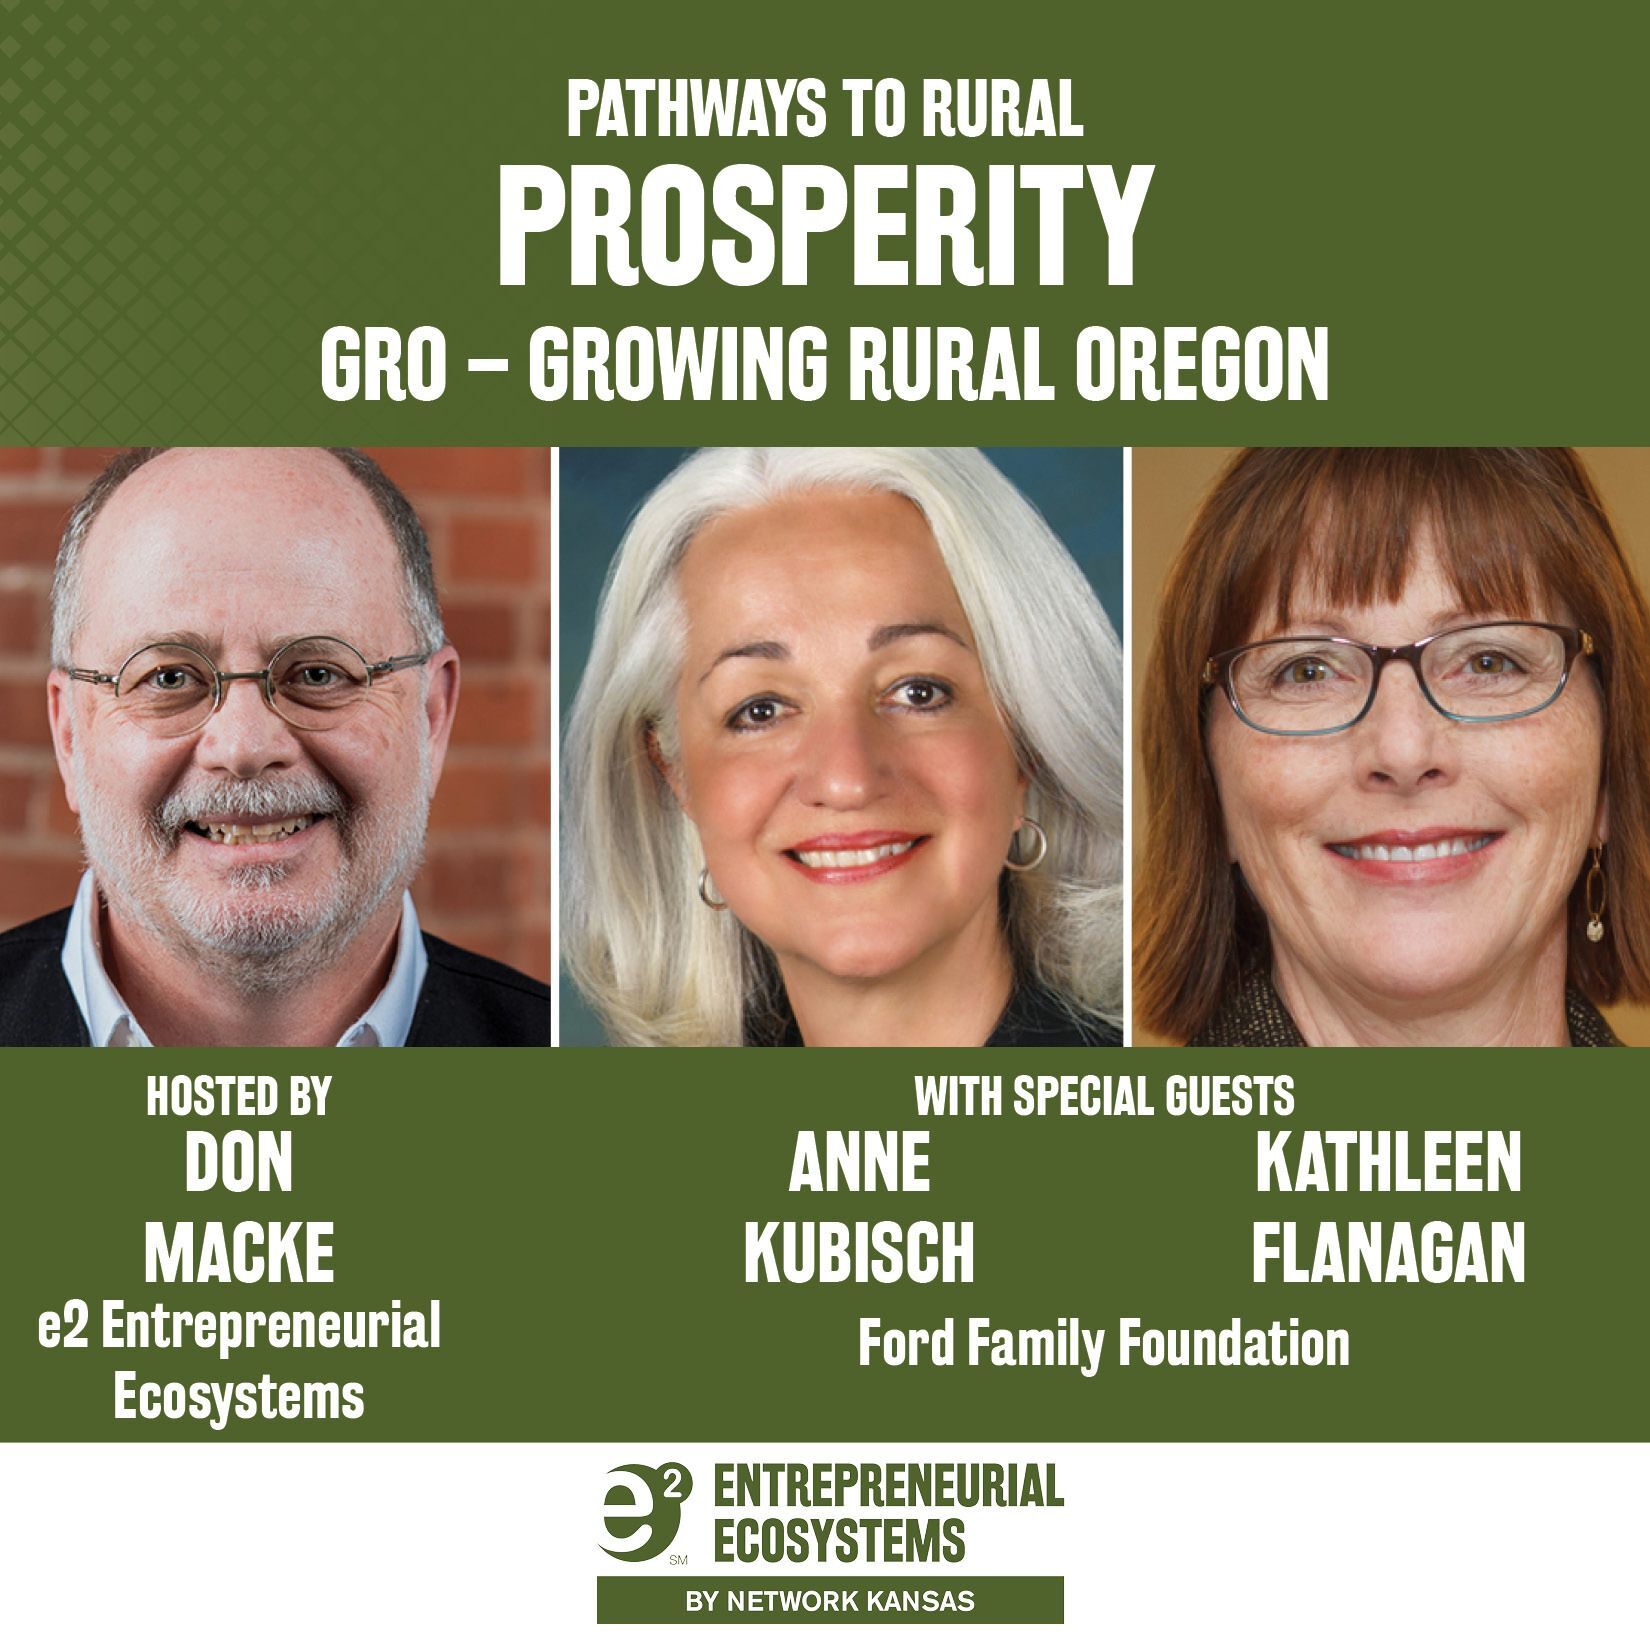 Growing Rural Oregon - GRO